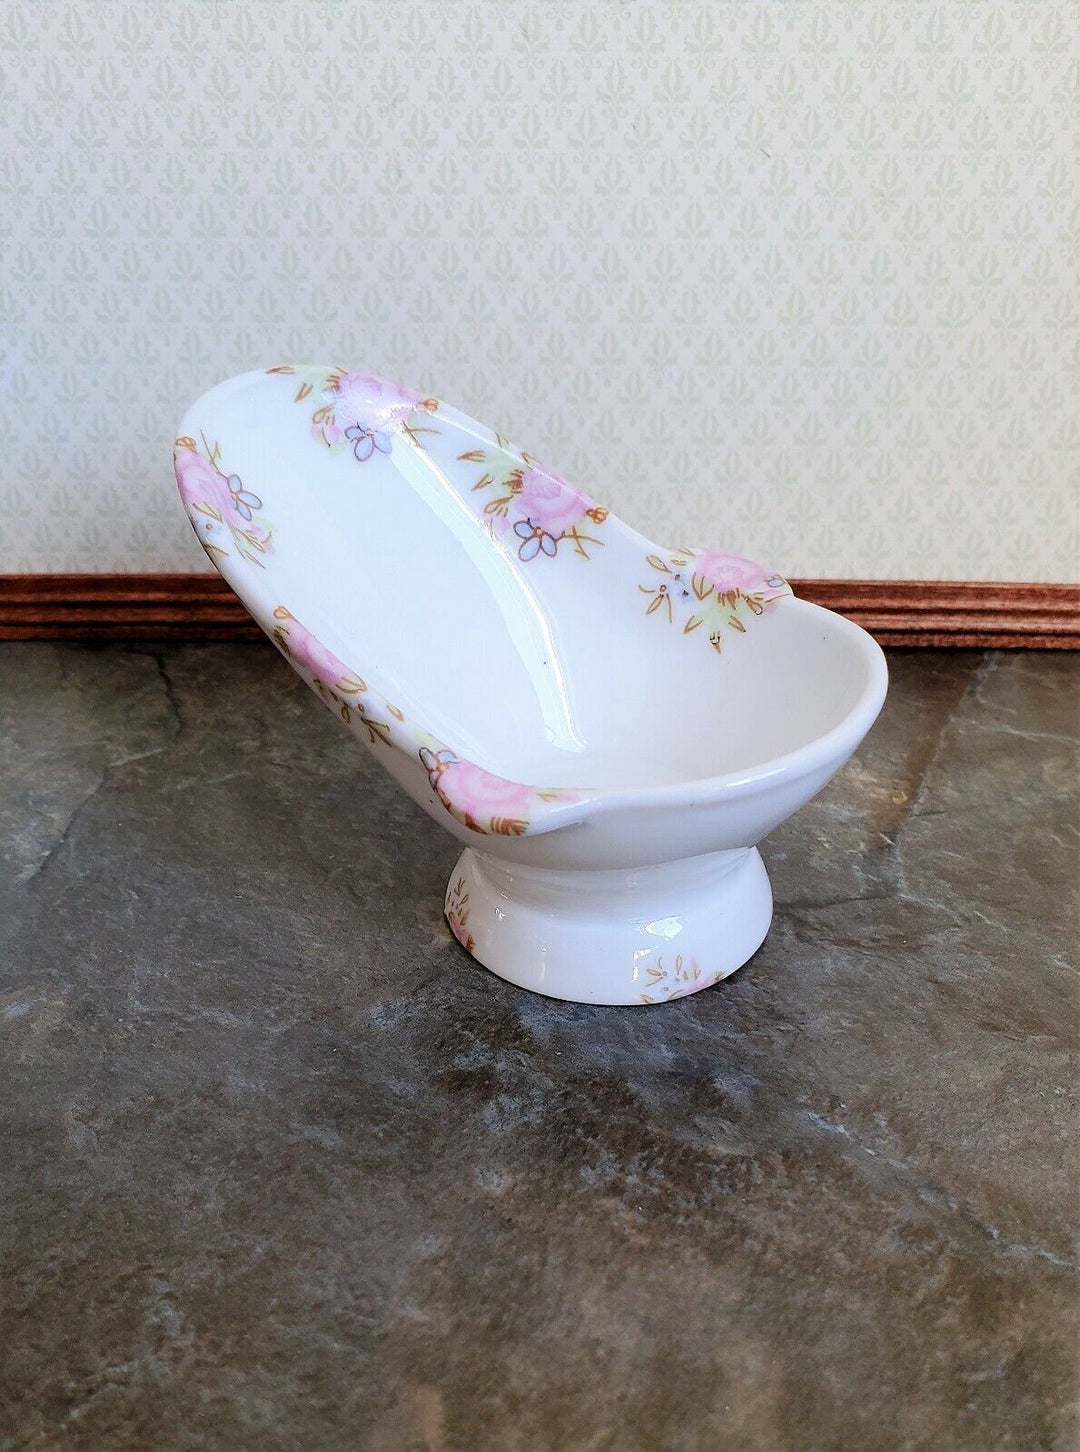 Dollhouse Miniature Hip Bathtub Ceramic Tub Small Pink Floral Design 1:12 Scale - Miniature Crush